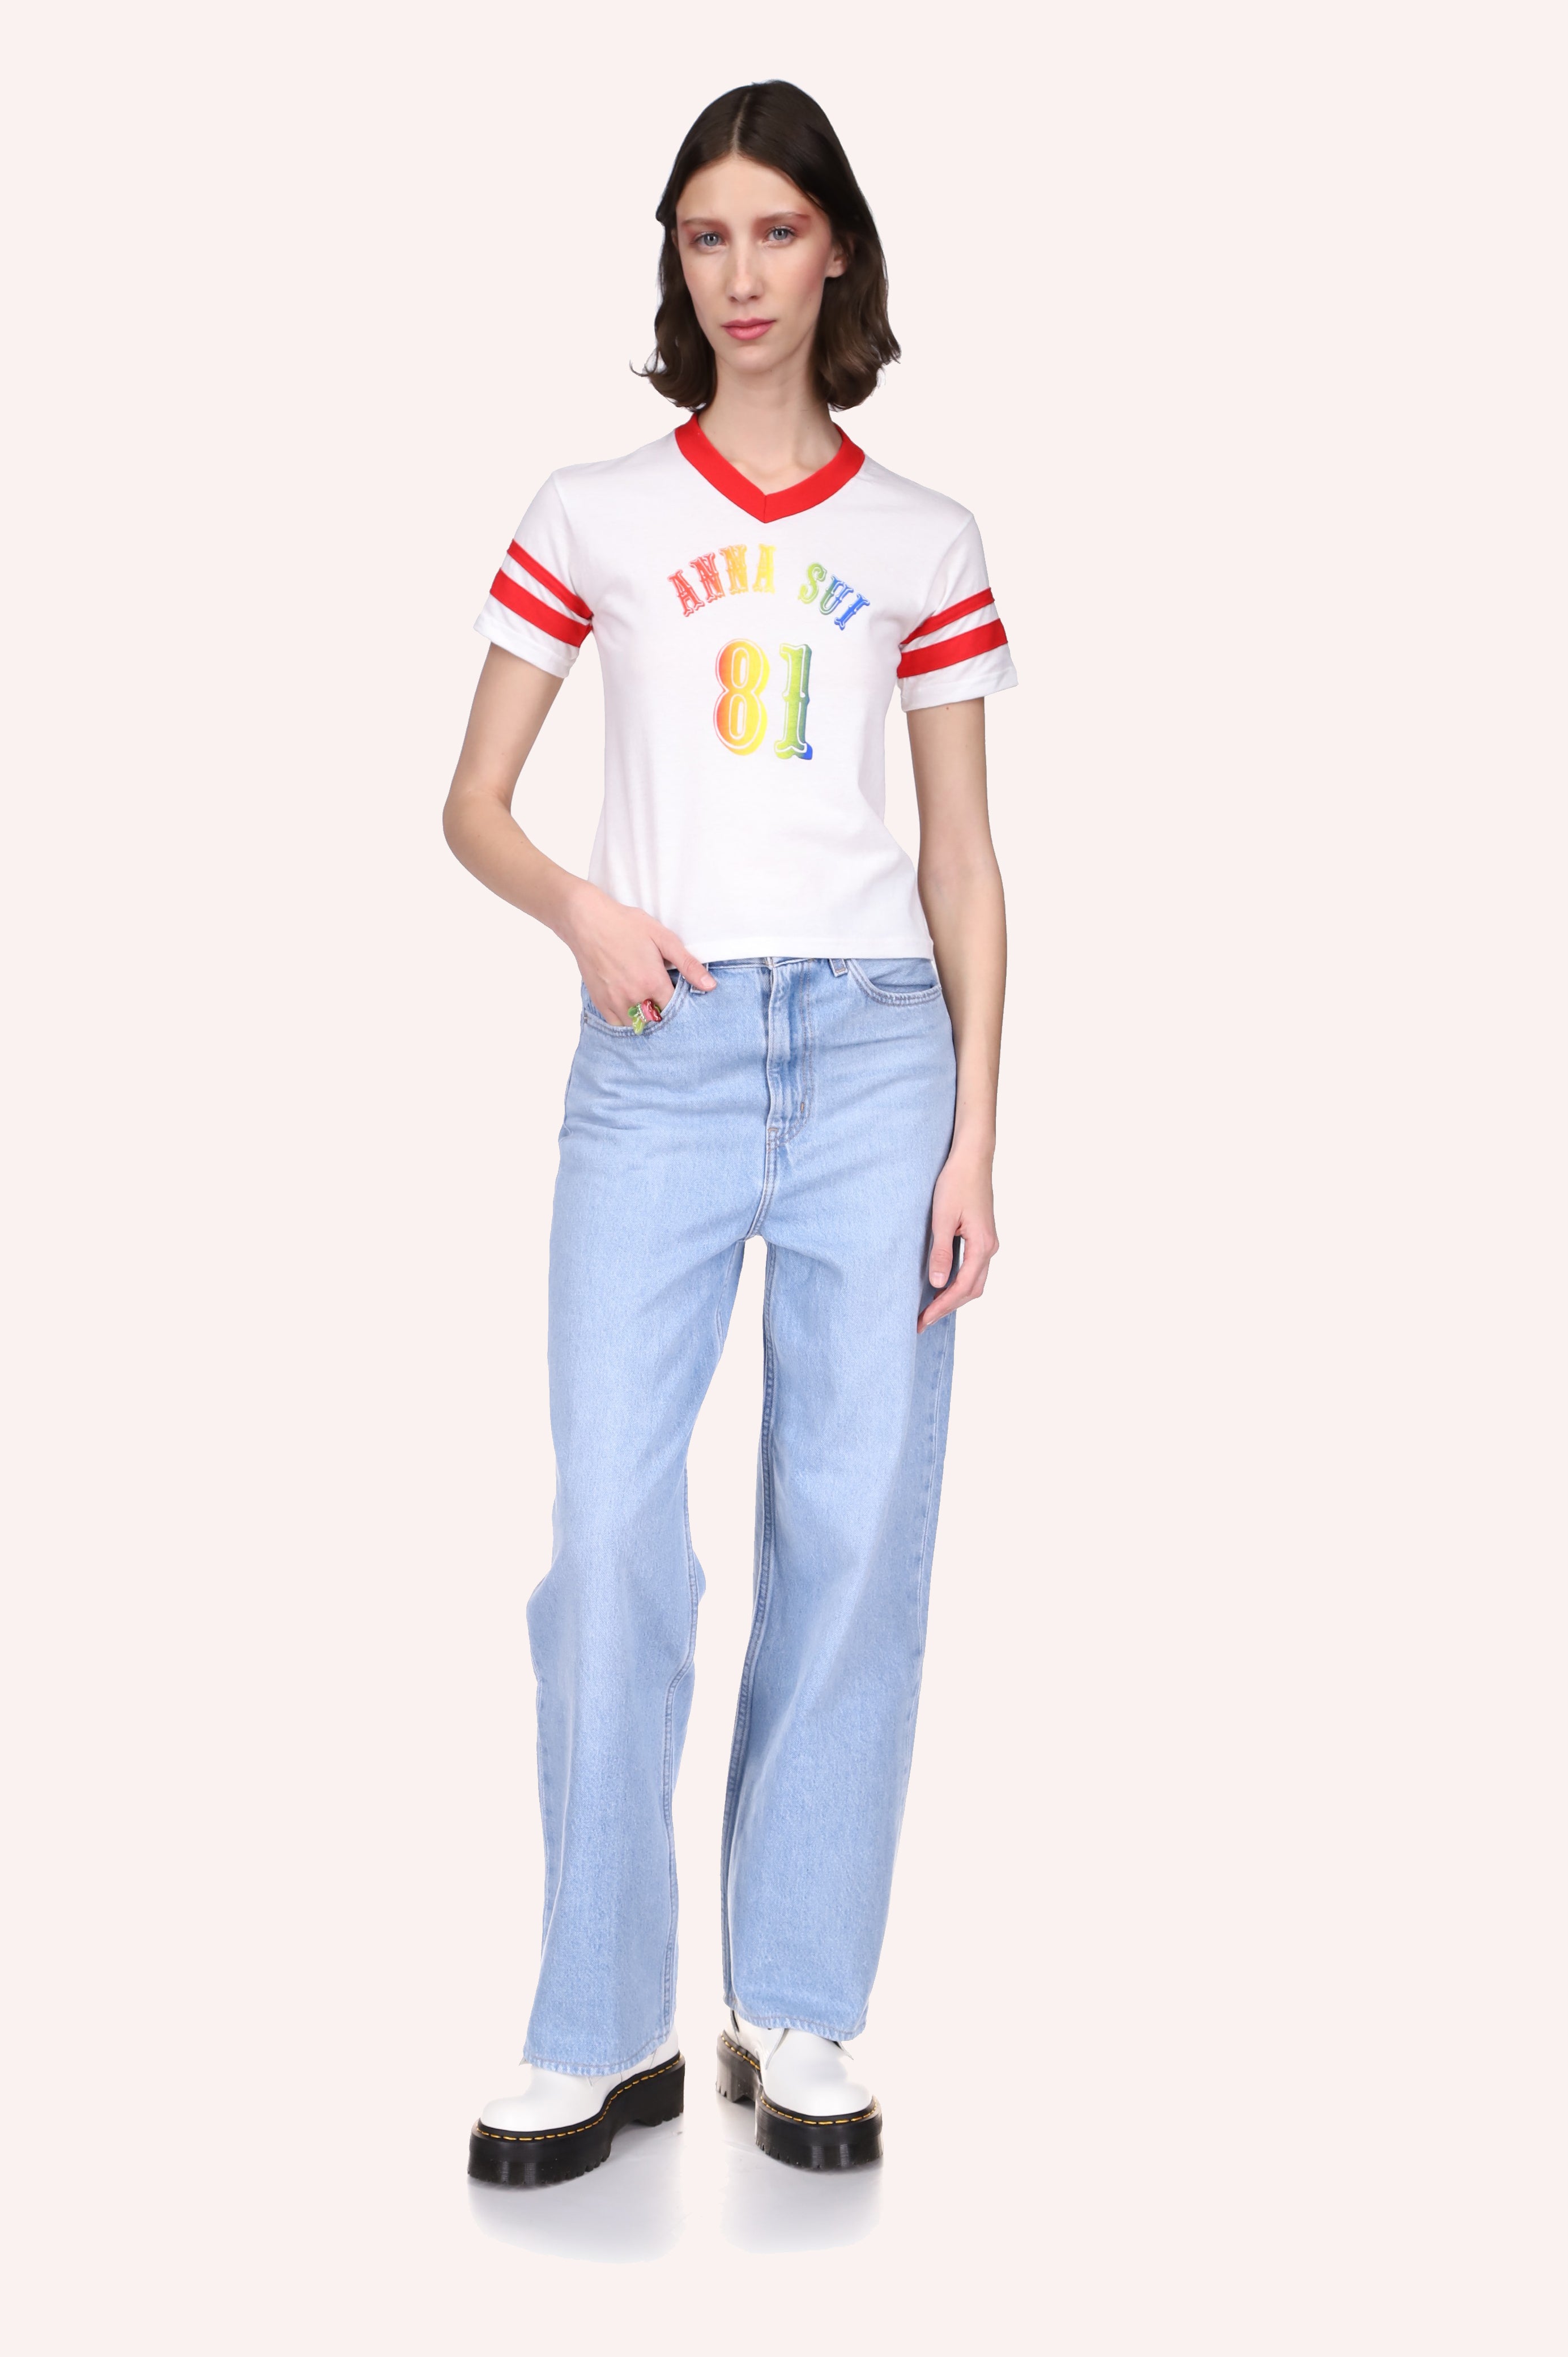 Anna Sui 81 V Neck Rainbow Football Tee, V-collar, short sleeves, white, with red highlight, and rainbow print